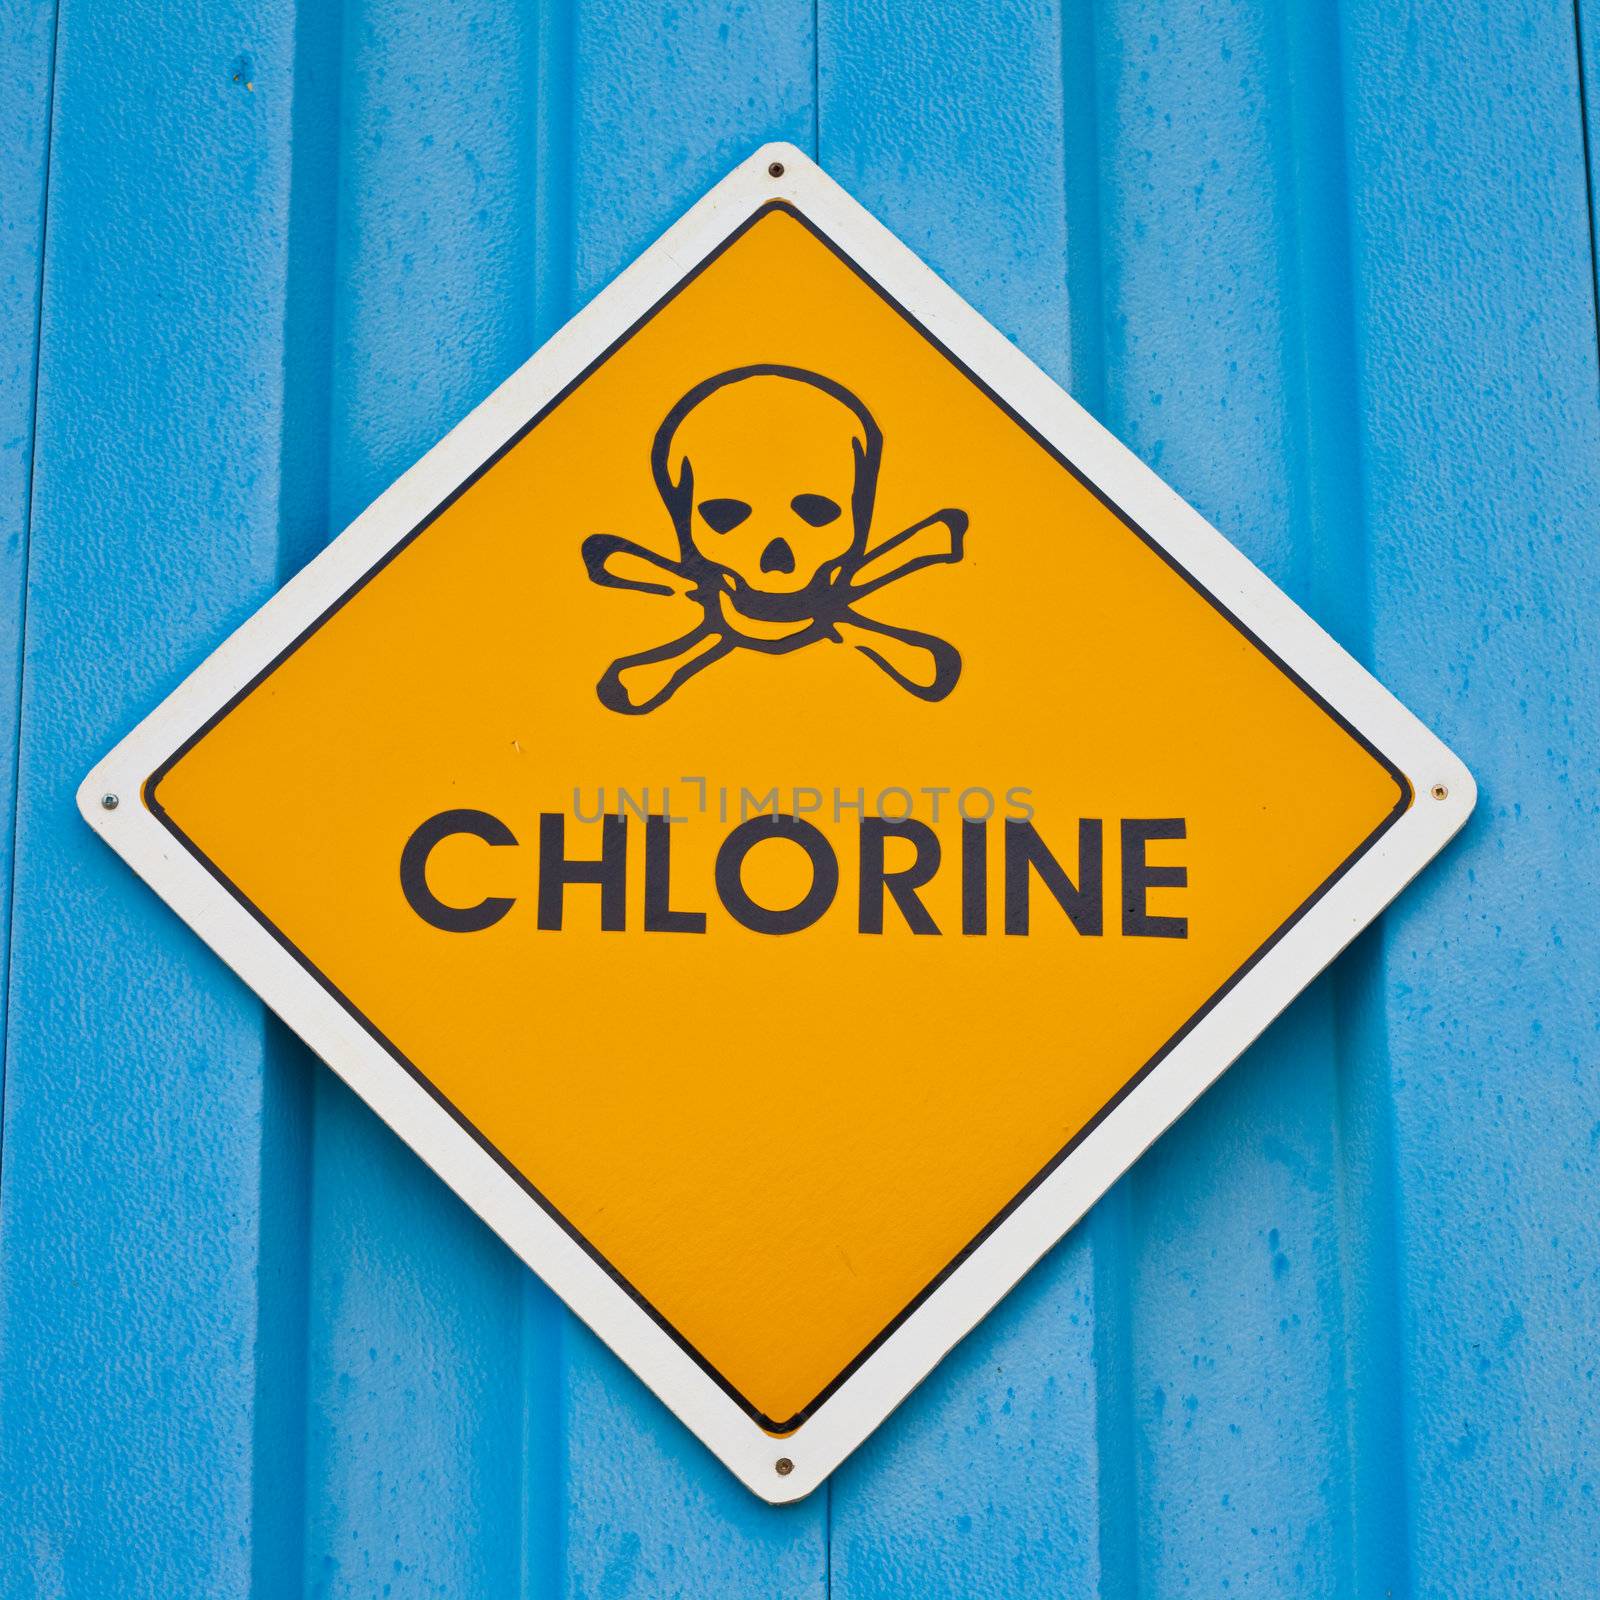 Chlorine warning sign by PiLens